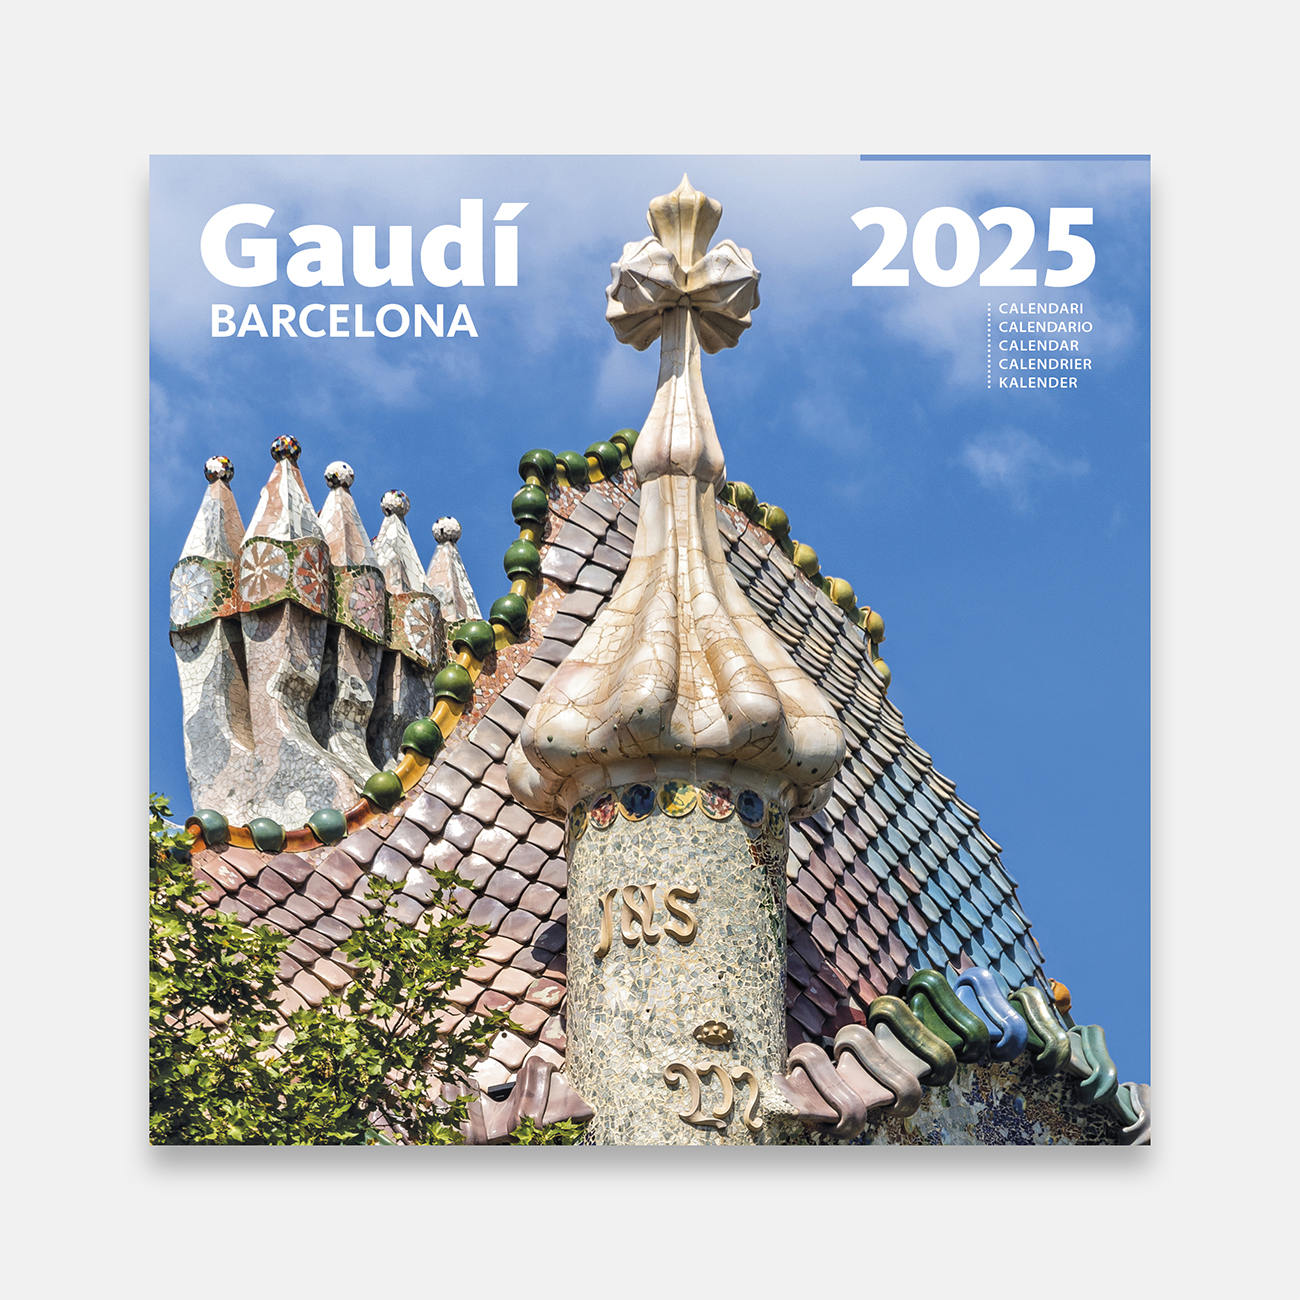 Calendari 2025 Gaudí (Casa Batlló) 25g1 a calendario pared 2025 gaudi casa batllo